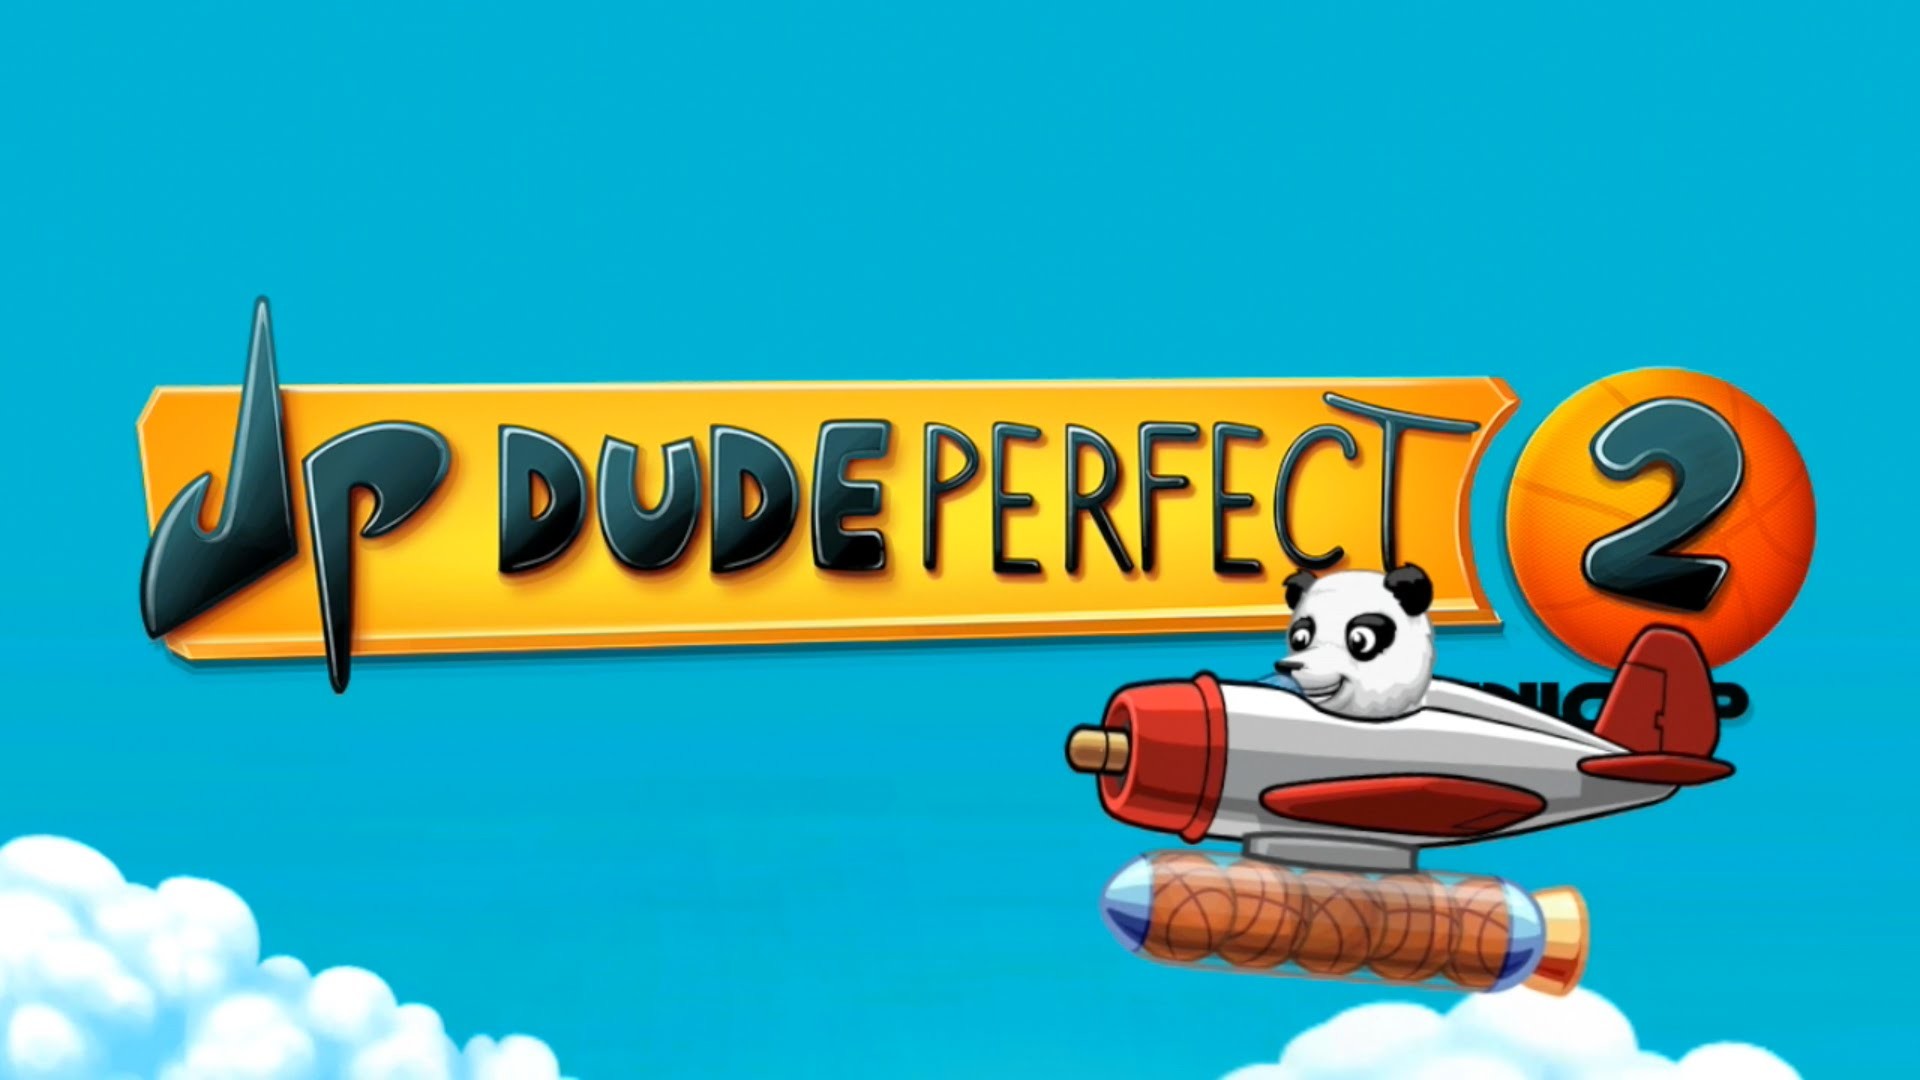 1920x1080 Dude Perfect 2 - App Check - iPhone / iPad iOS Game - Miniclip.com - YouTube